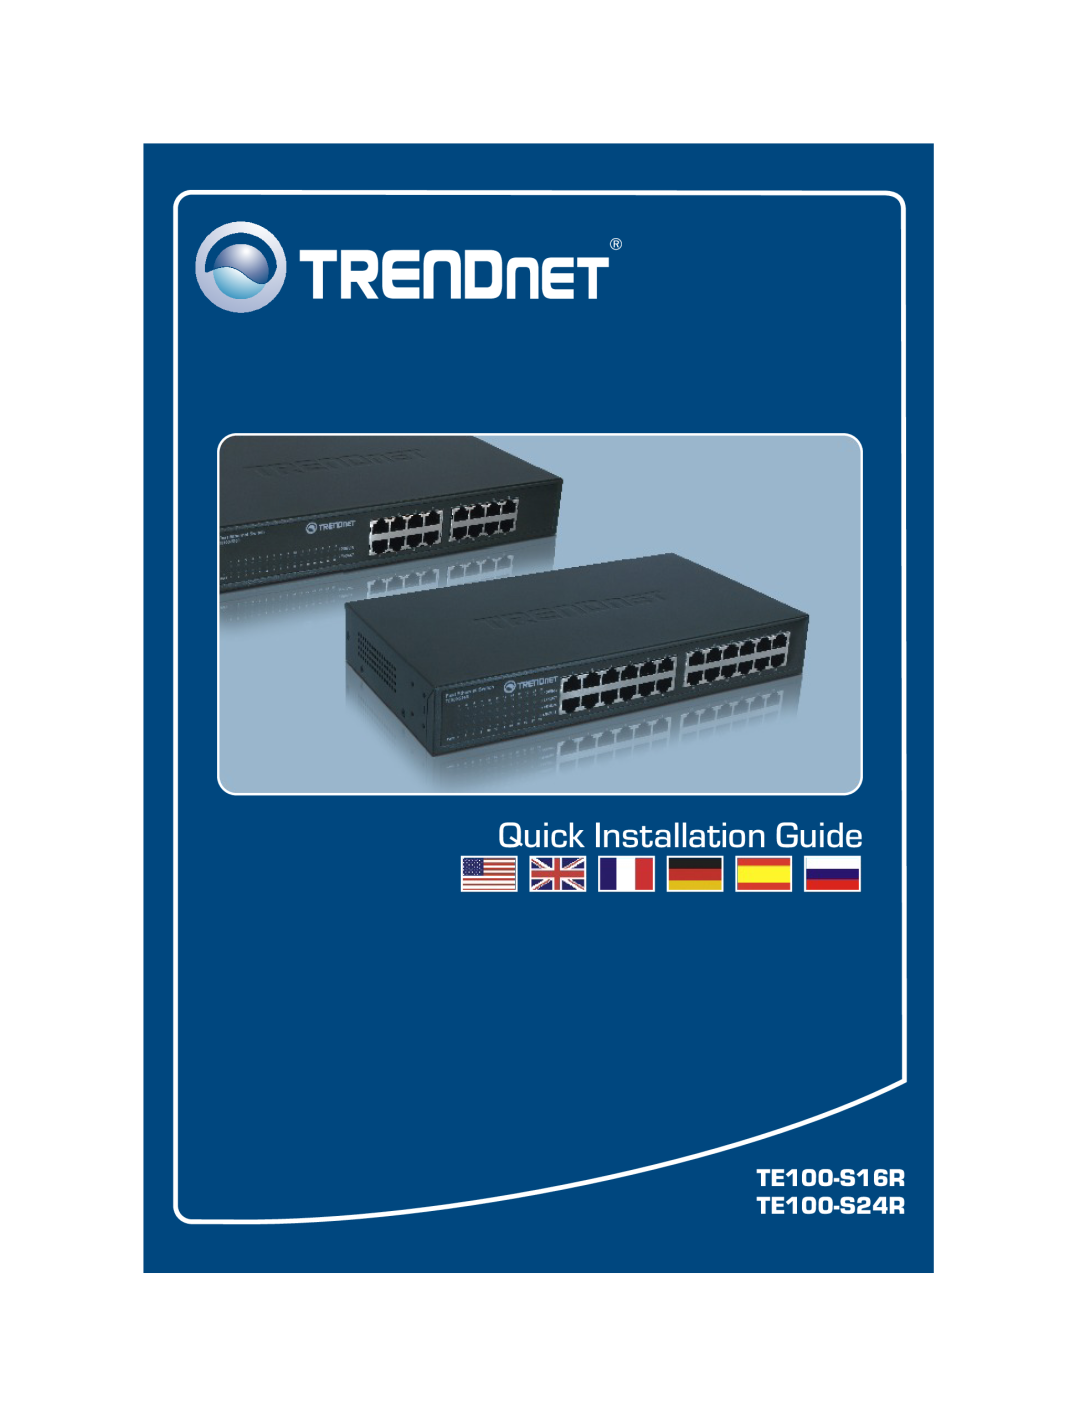 TRENDnet manual Quick Installation Guide, TE100-S16R TE100-S24R 